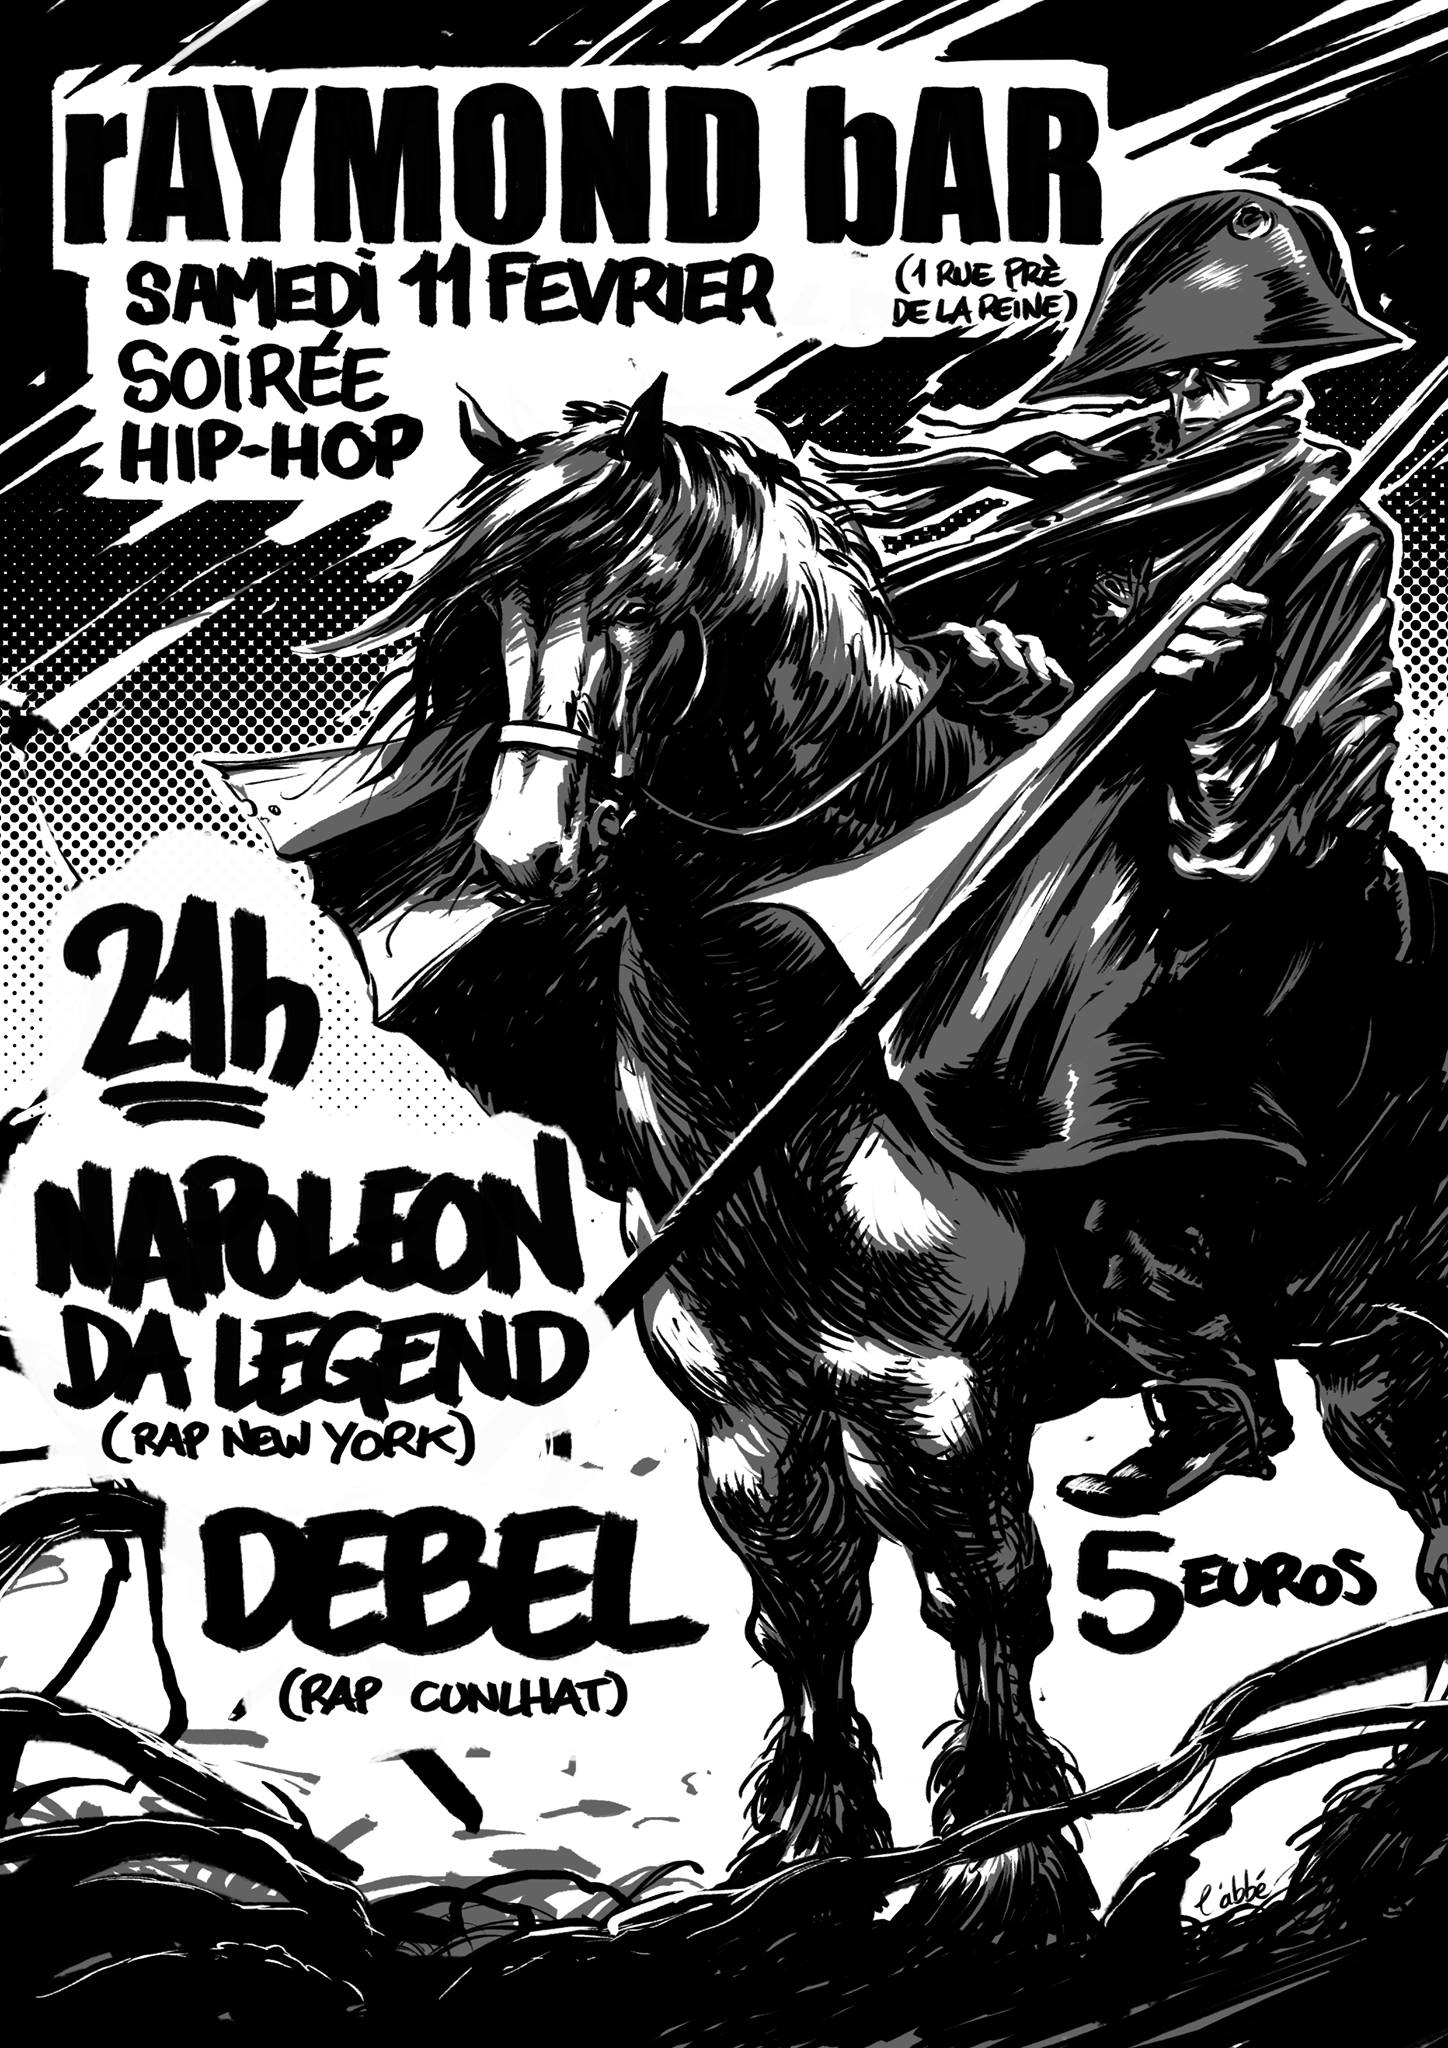 Napoleon Da Legend / Debel